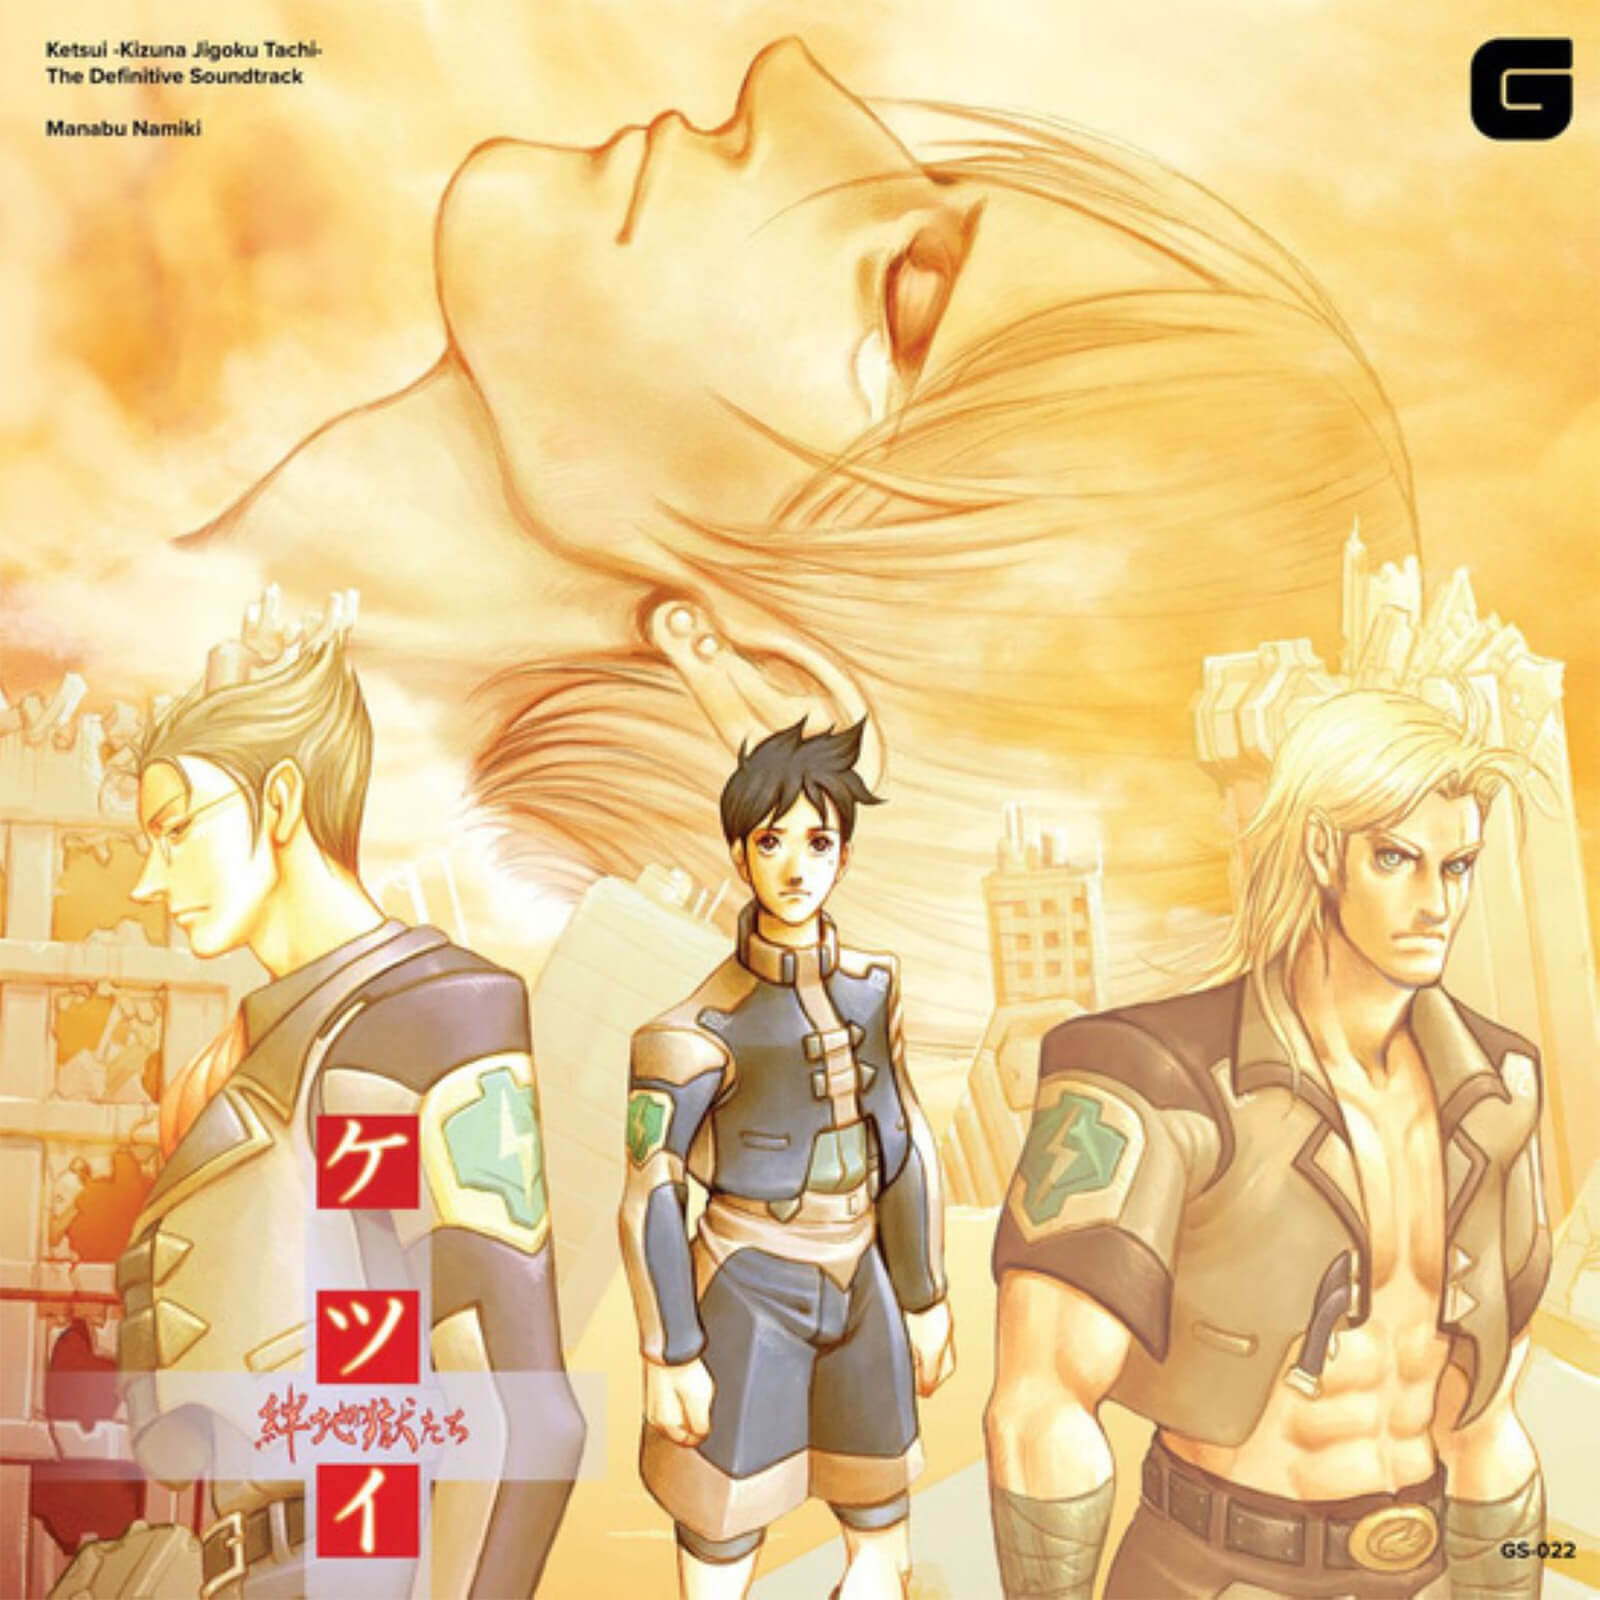 Brave Wave - Ketsui -Kizuna Jigoku Tachi- (The Definitive Soundtrack) 2xLP